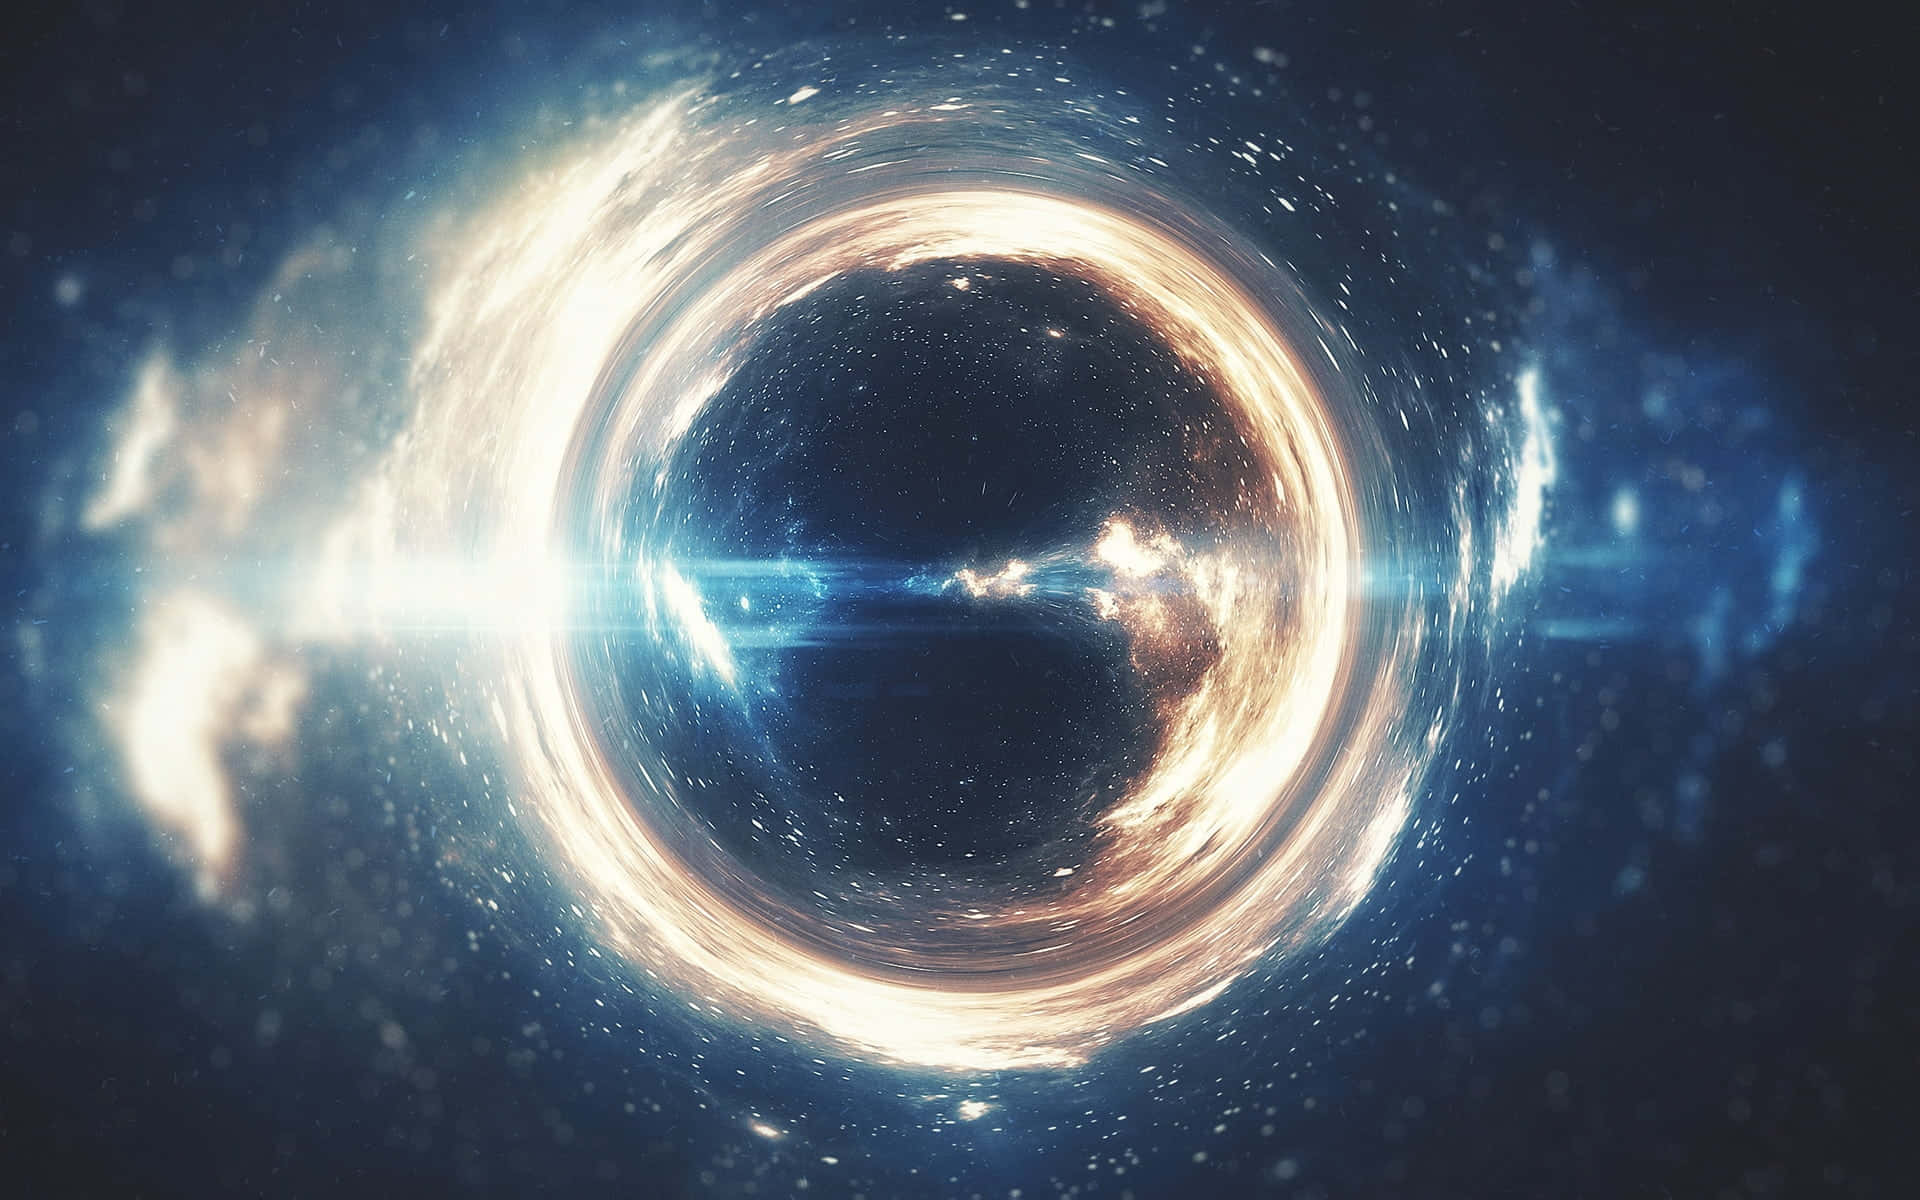 A View of a Super-Massive Black Hole Wallpaper